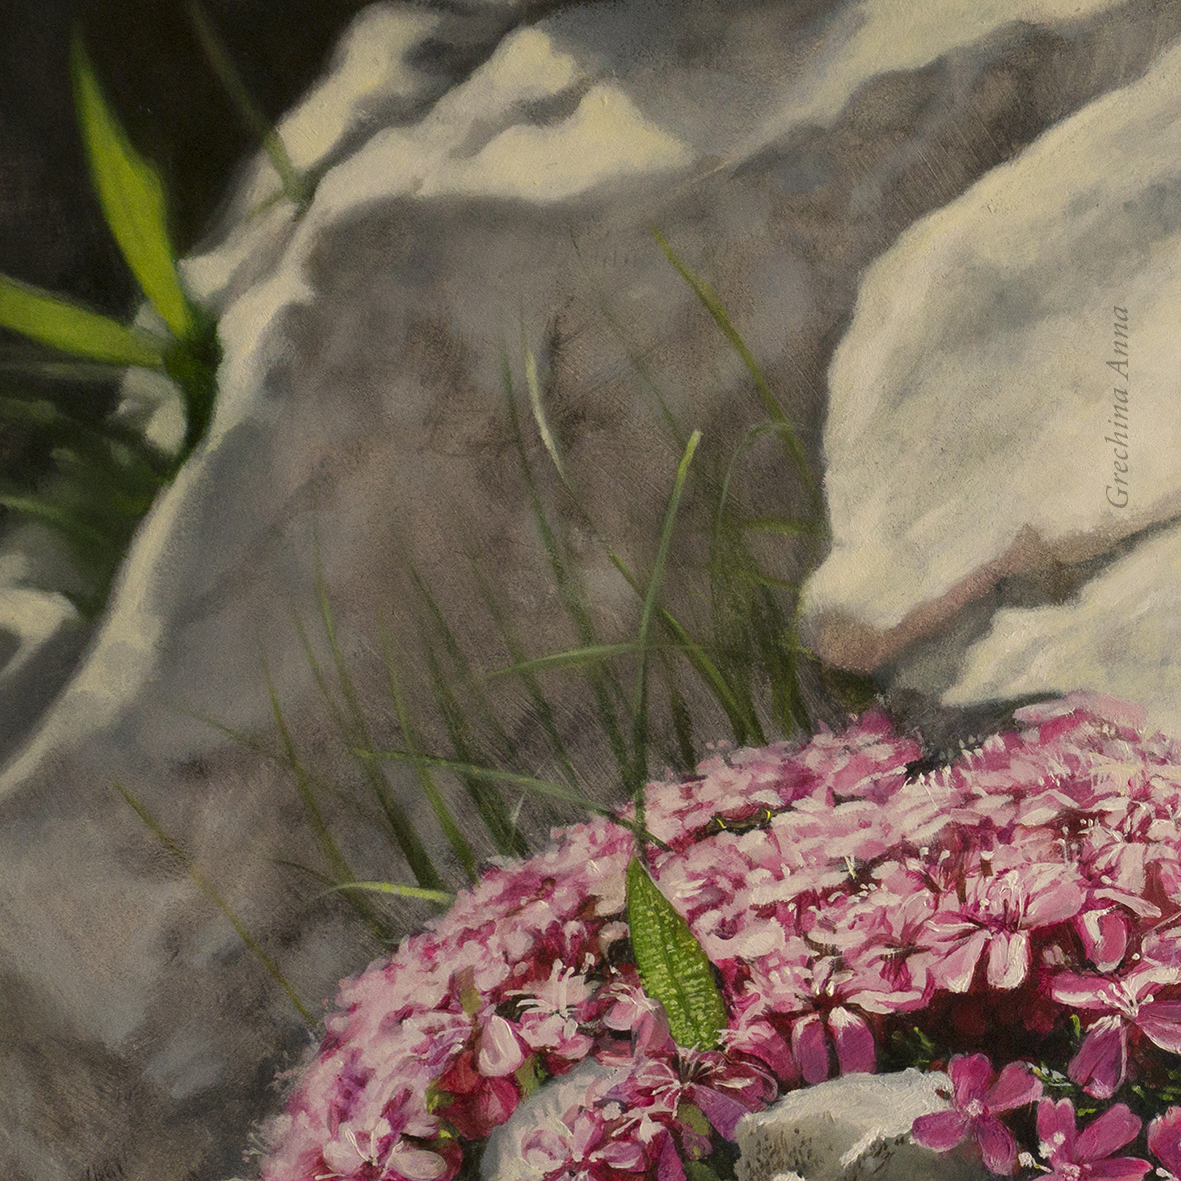 "Flowers on the rocks", still life. Grechina Anna painting, photorealism.